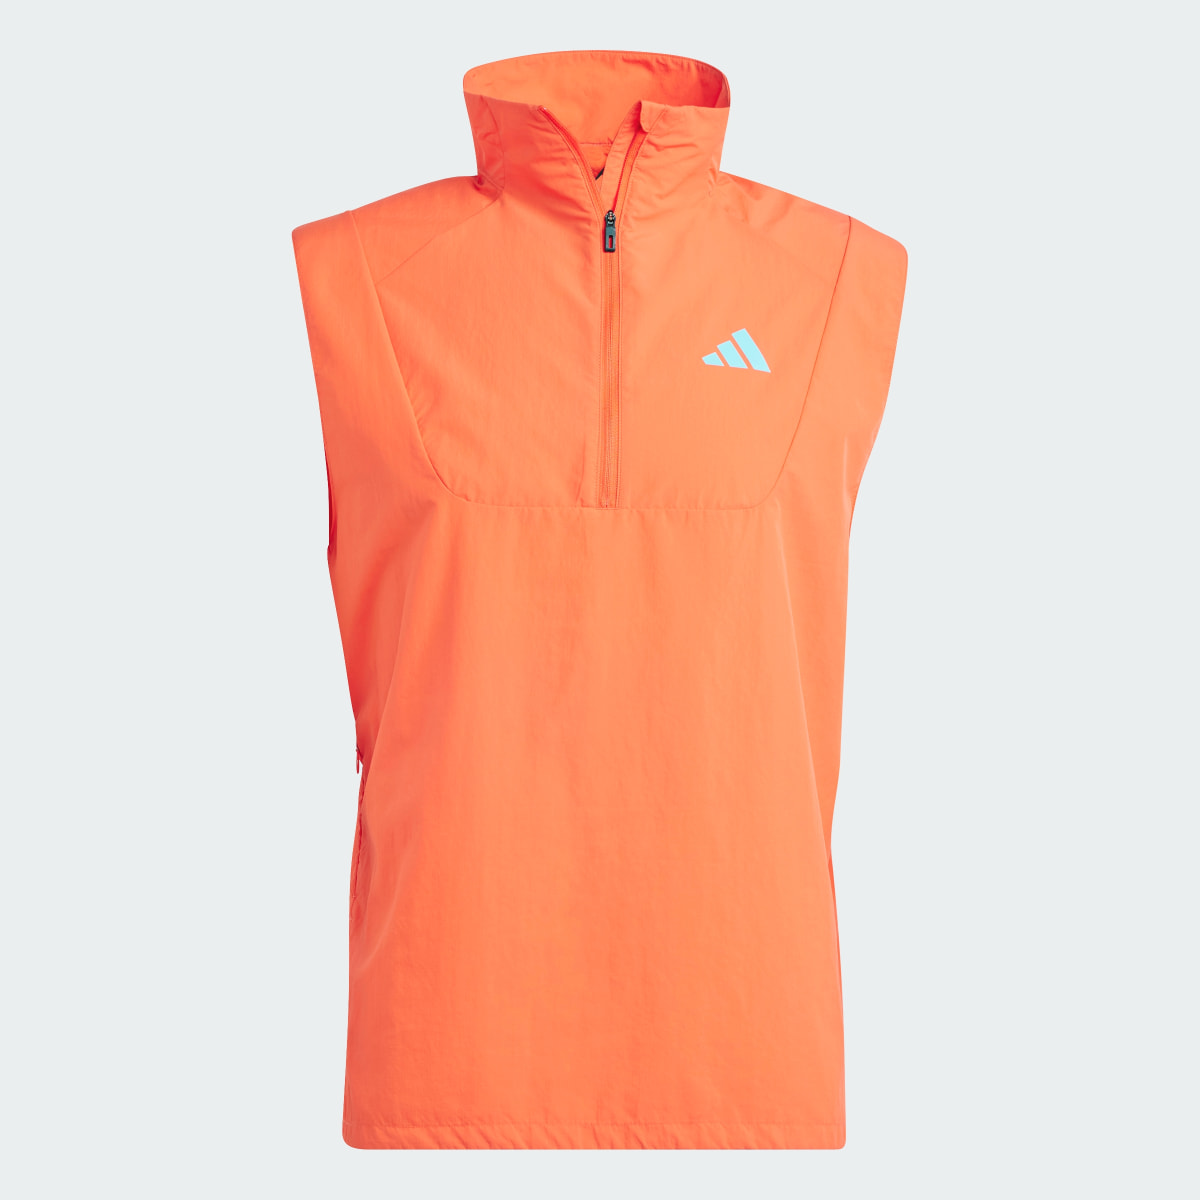 Adidas Adizero Half-Zip Running Vest. 5